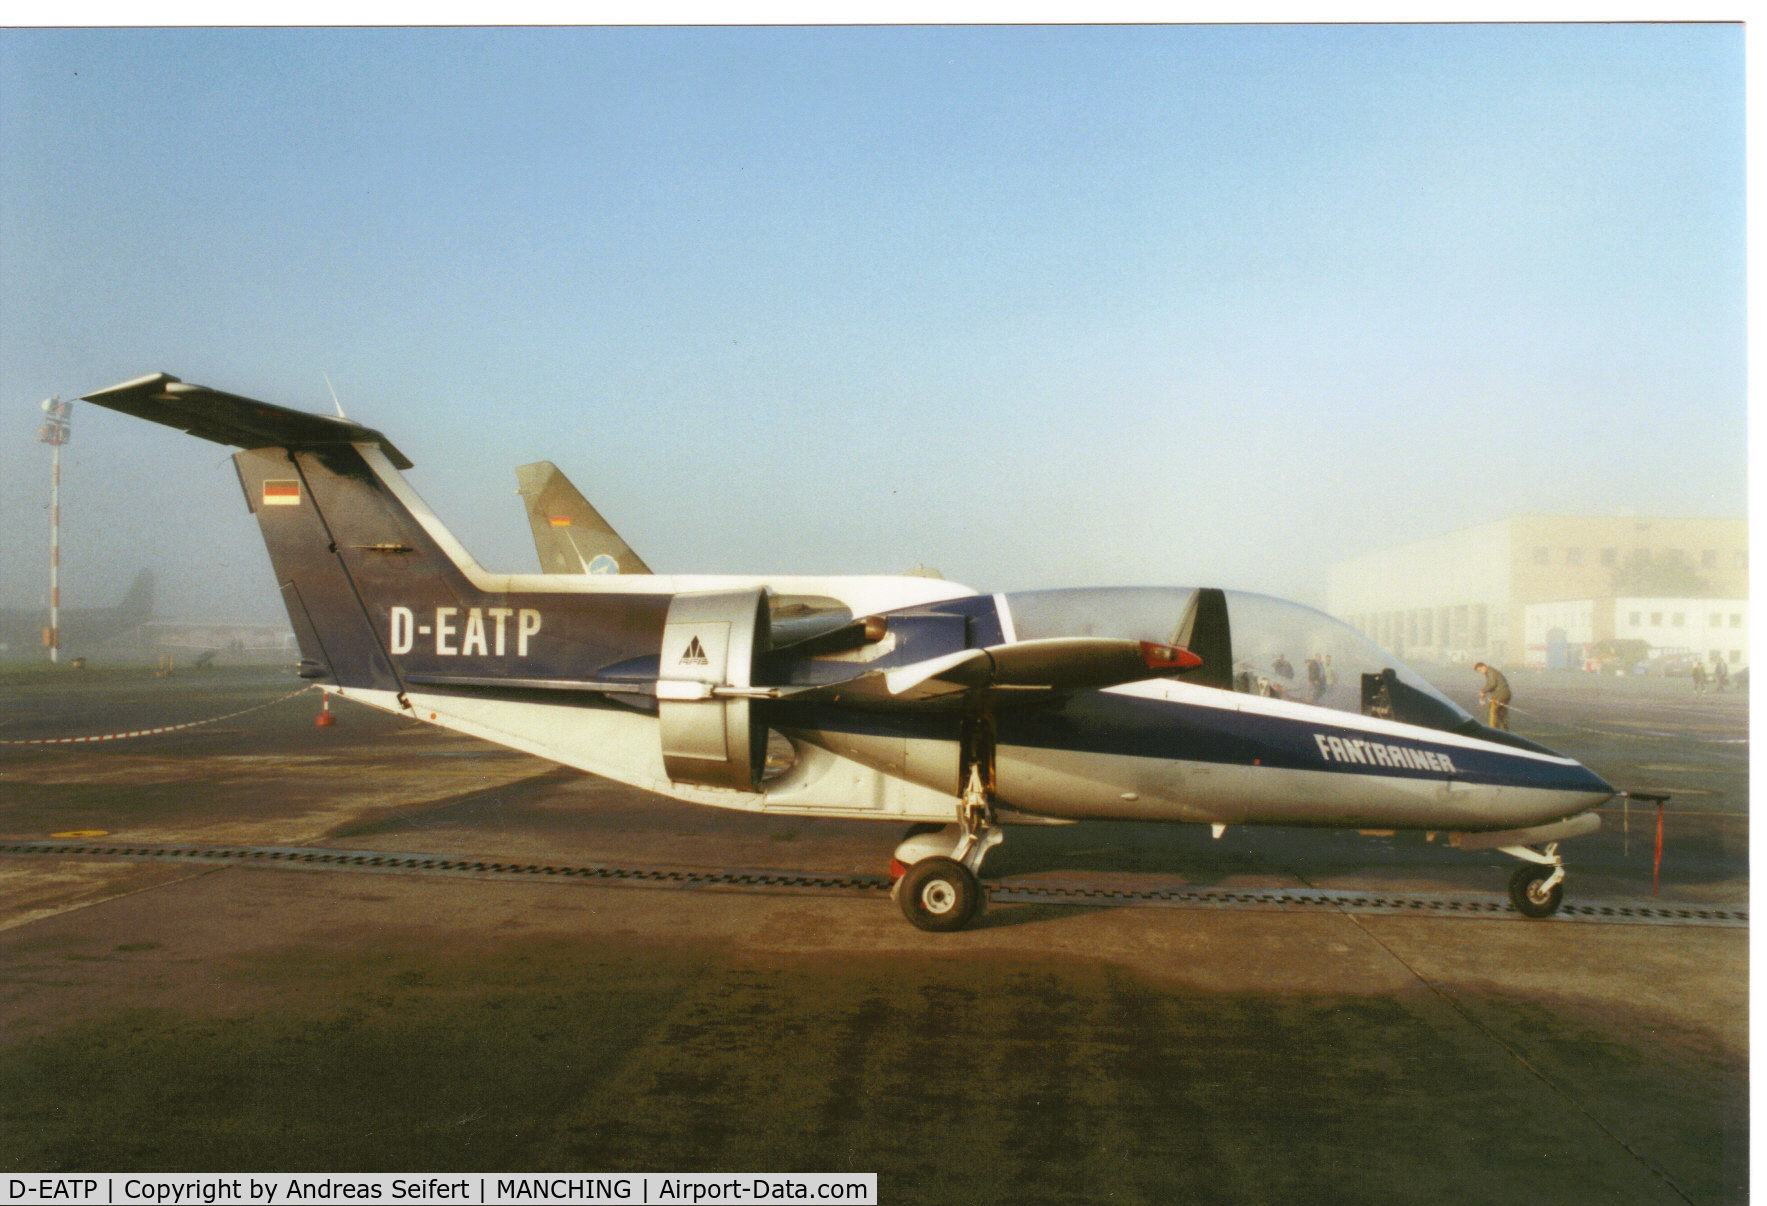 D-EATP, 1985 RFB Fantrainer 400 C/N 011, Manching 2002